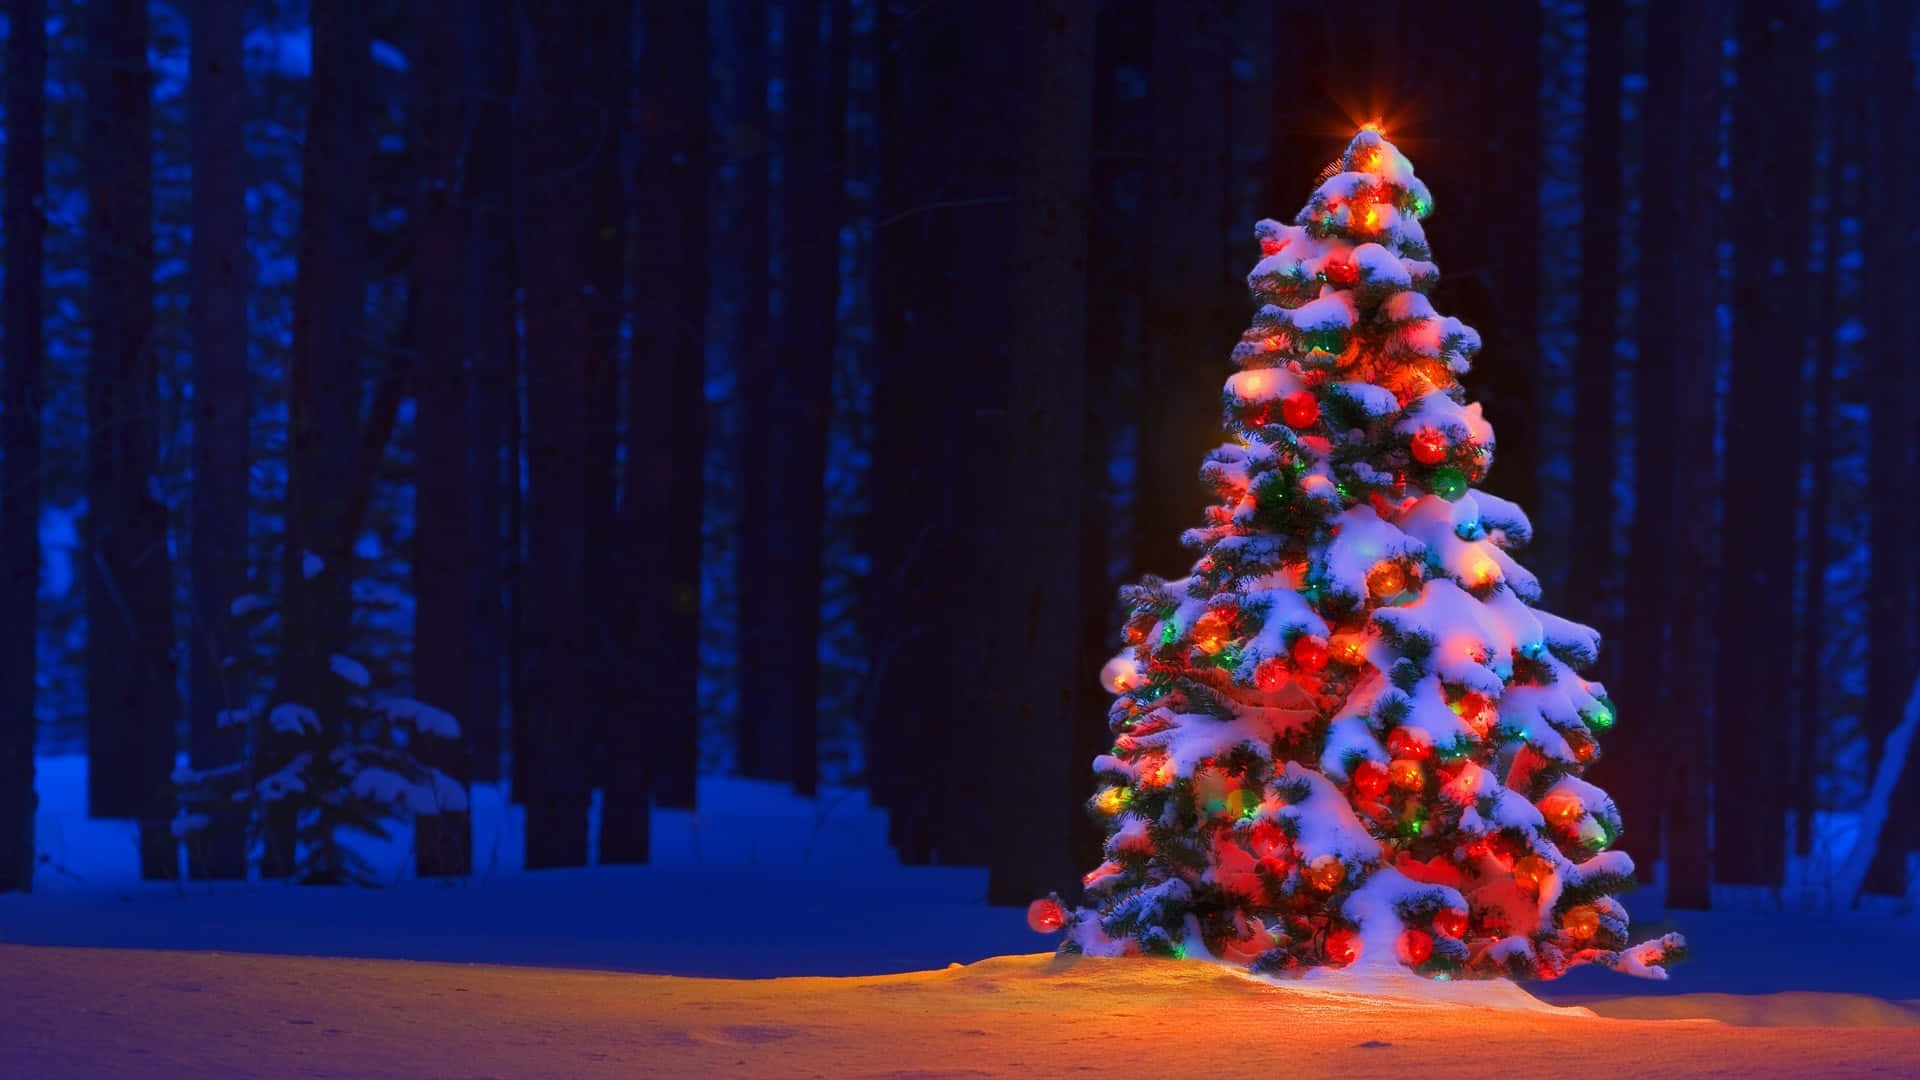 Illuminated Christmas Tree with Ornaments